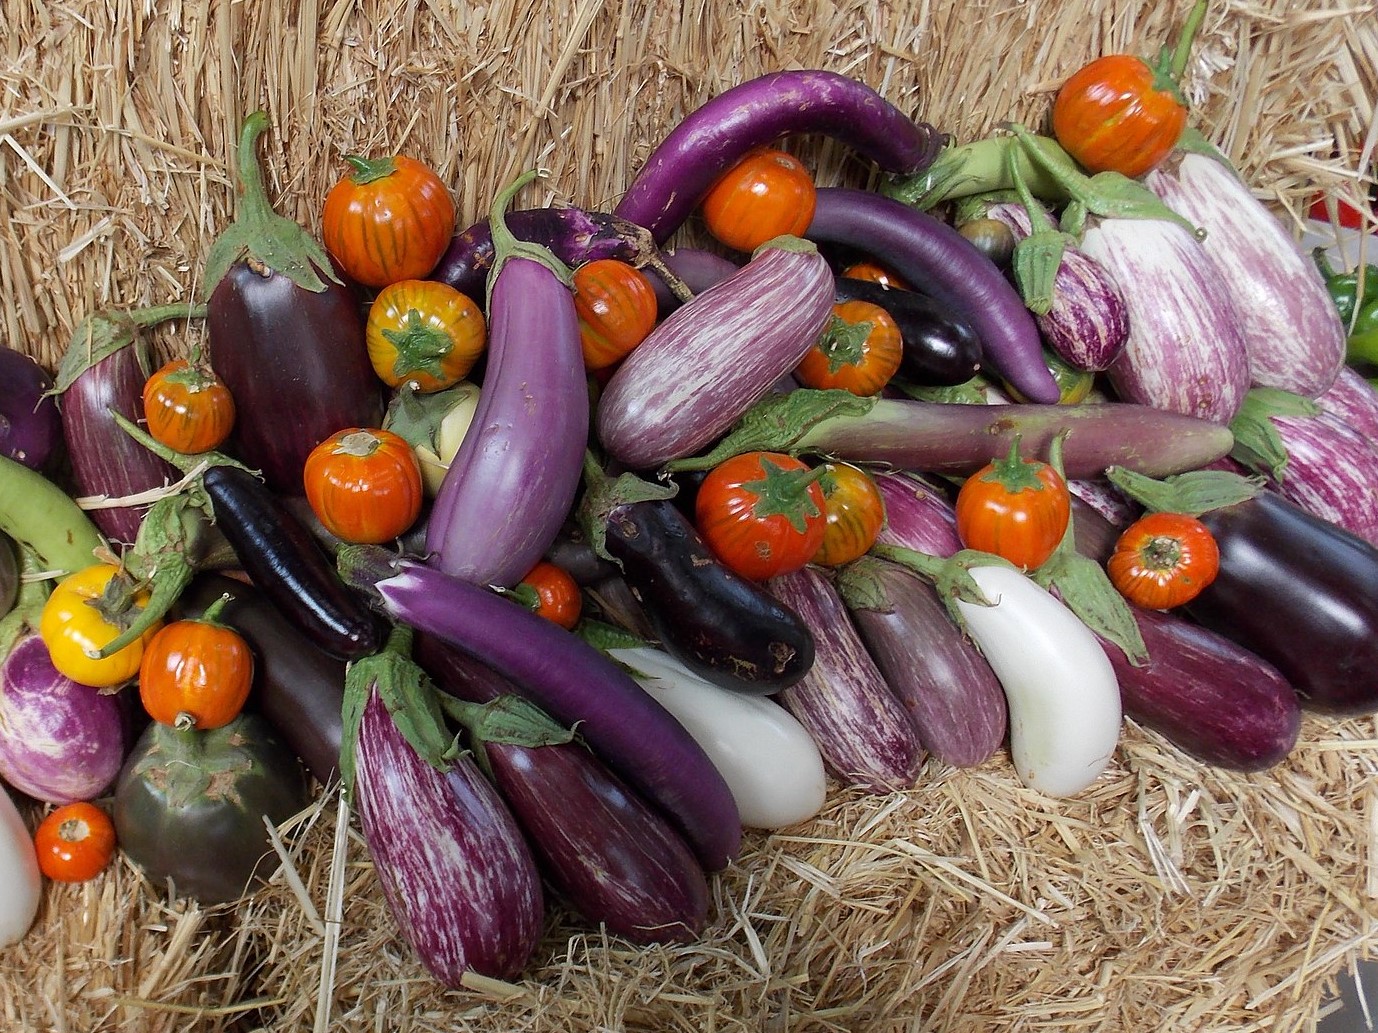 Eggplant display